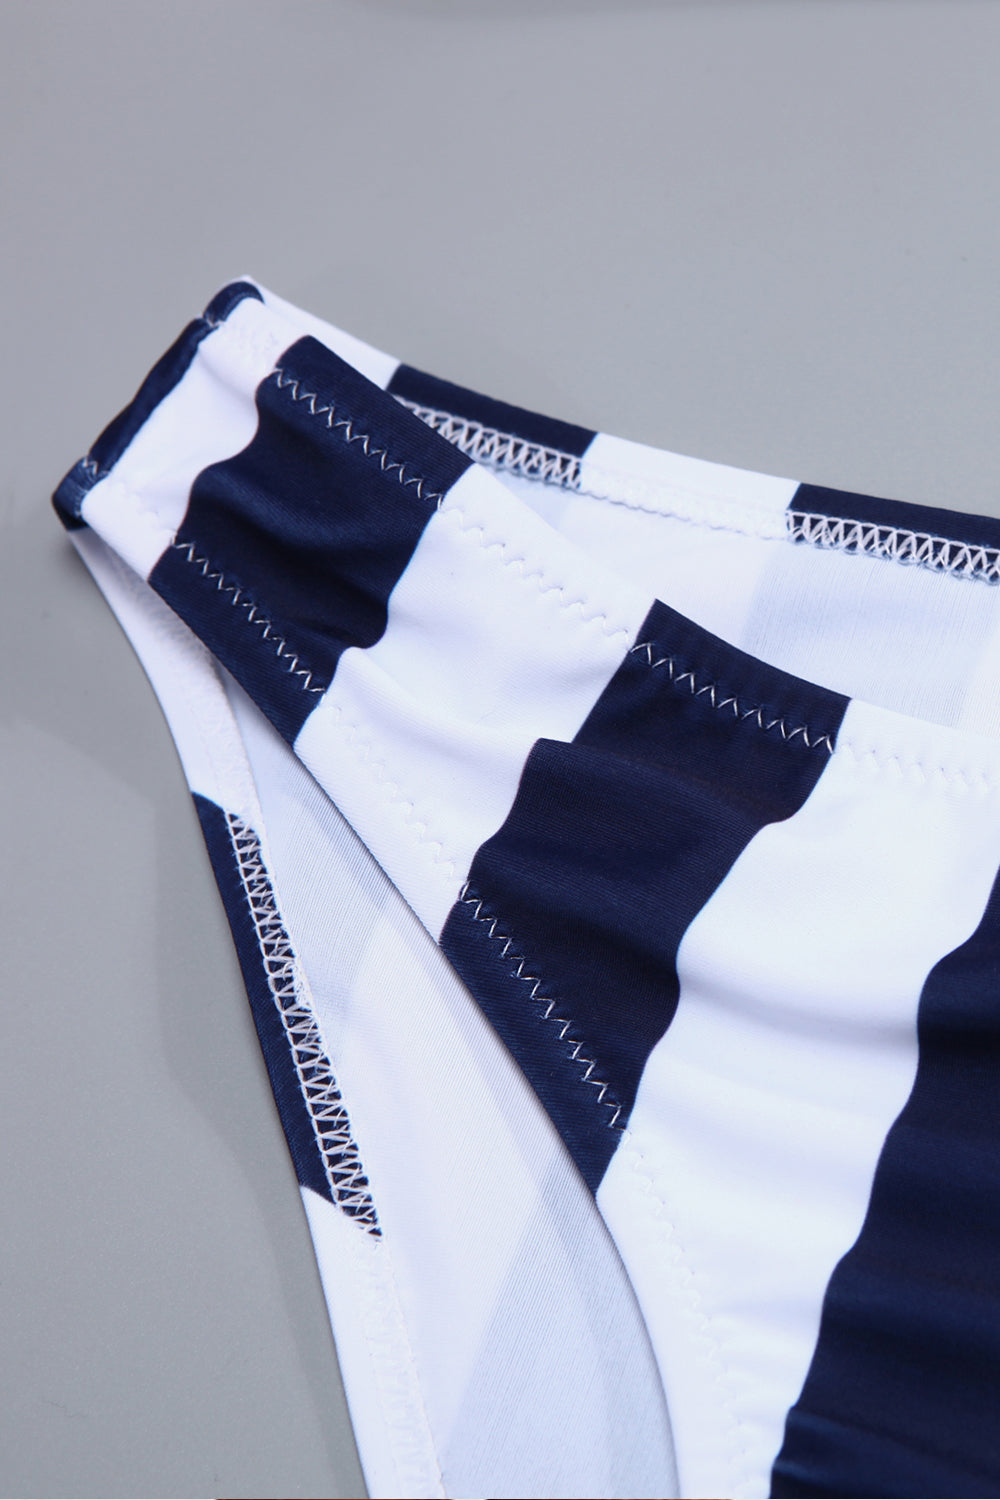 Iyasson Breezy Navy Blue Stripe  Bikini Set